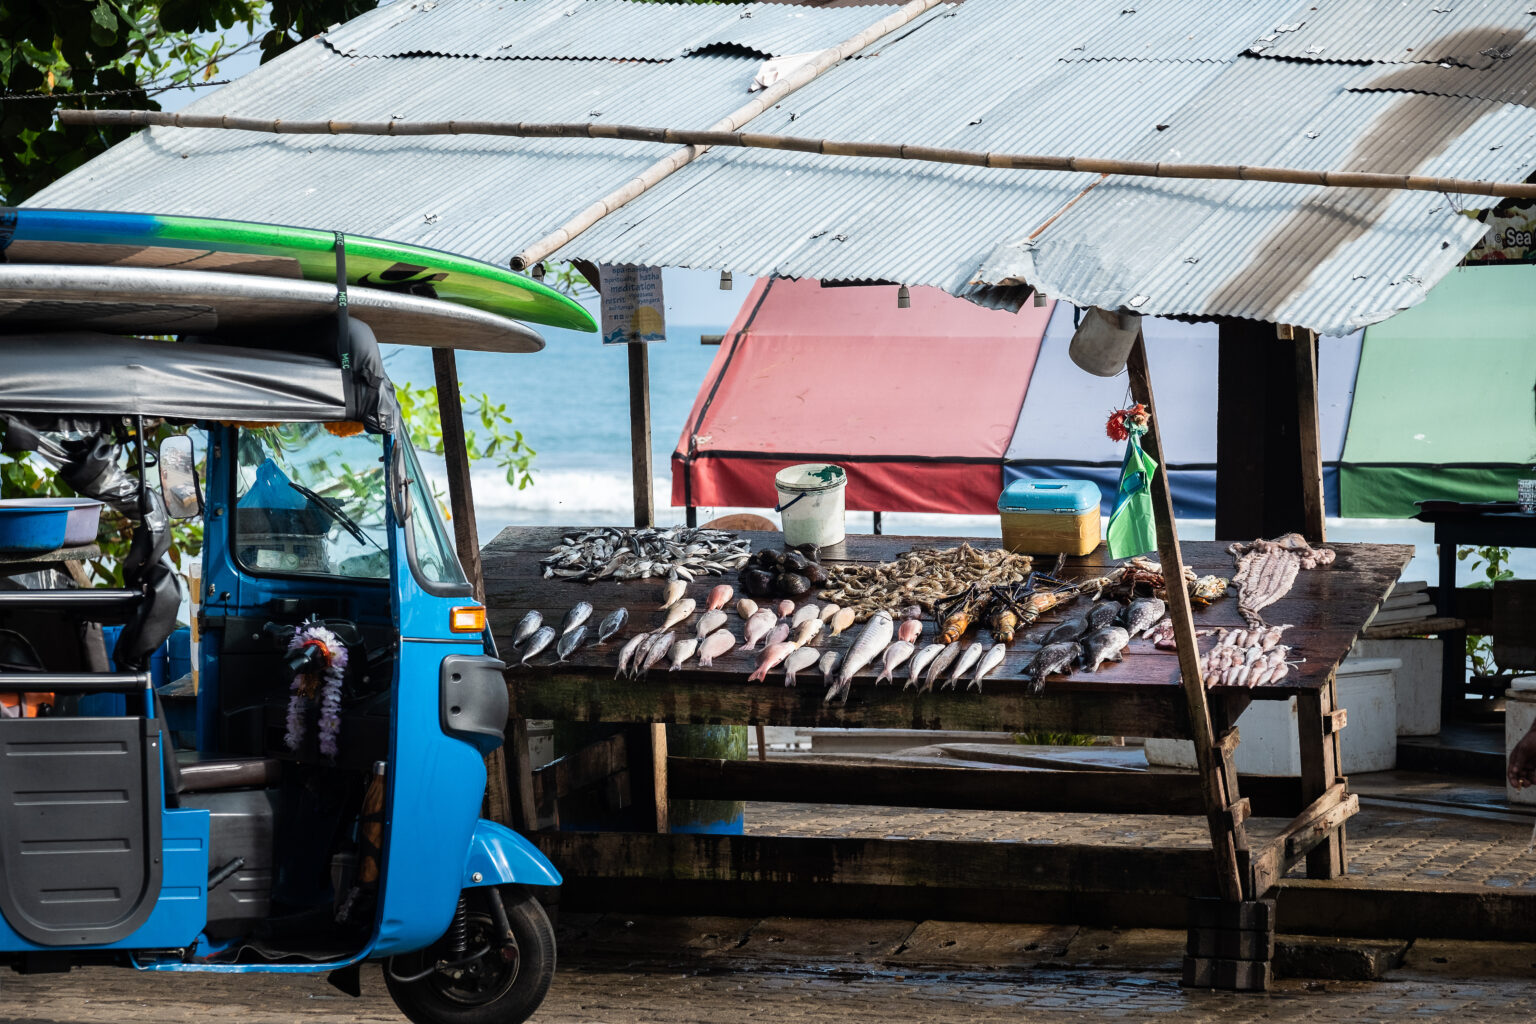 A tuktuk in the fish market in Negombo